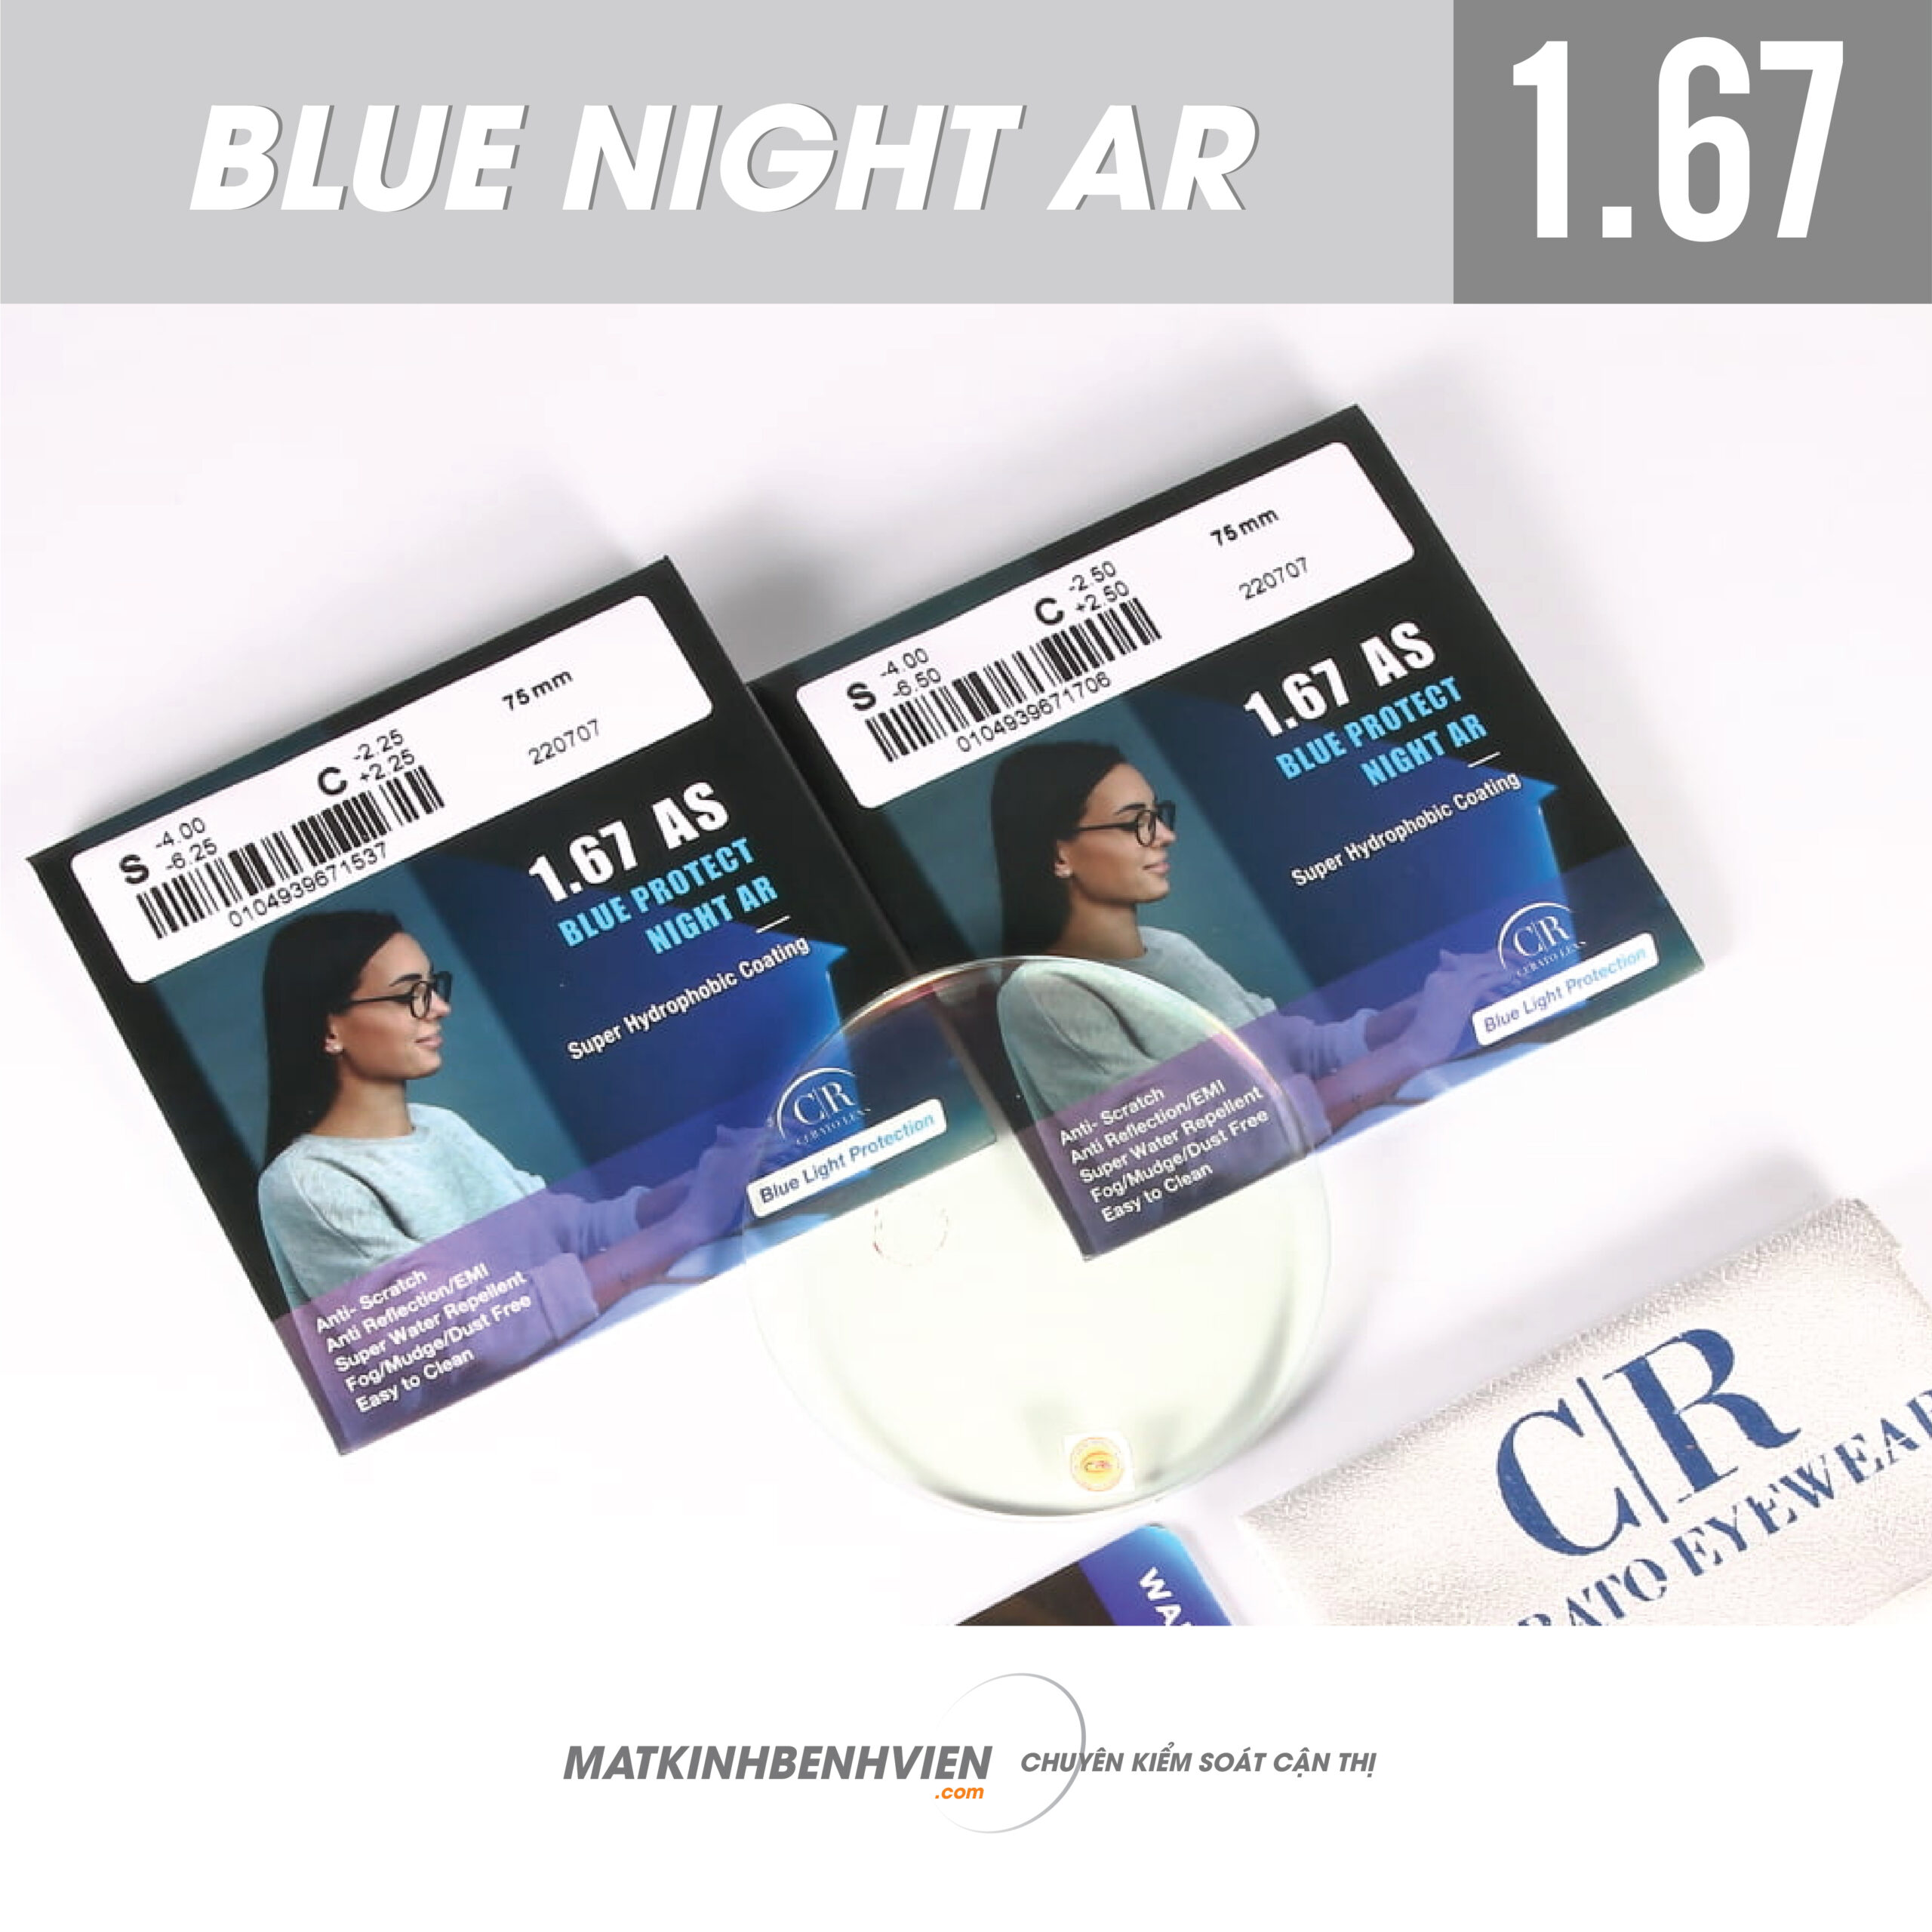 1.67 BLUE NIGHT AR